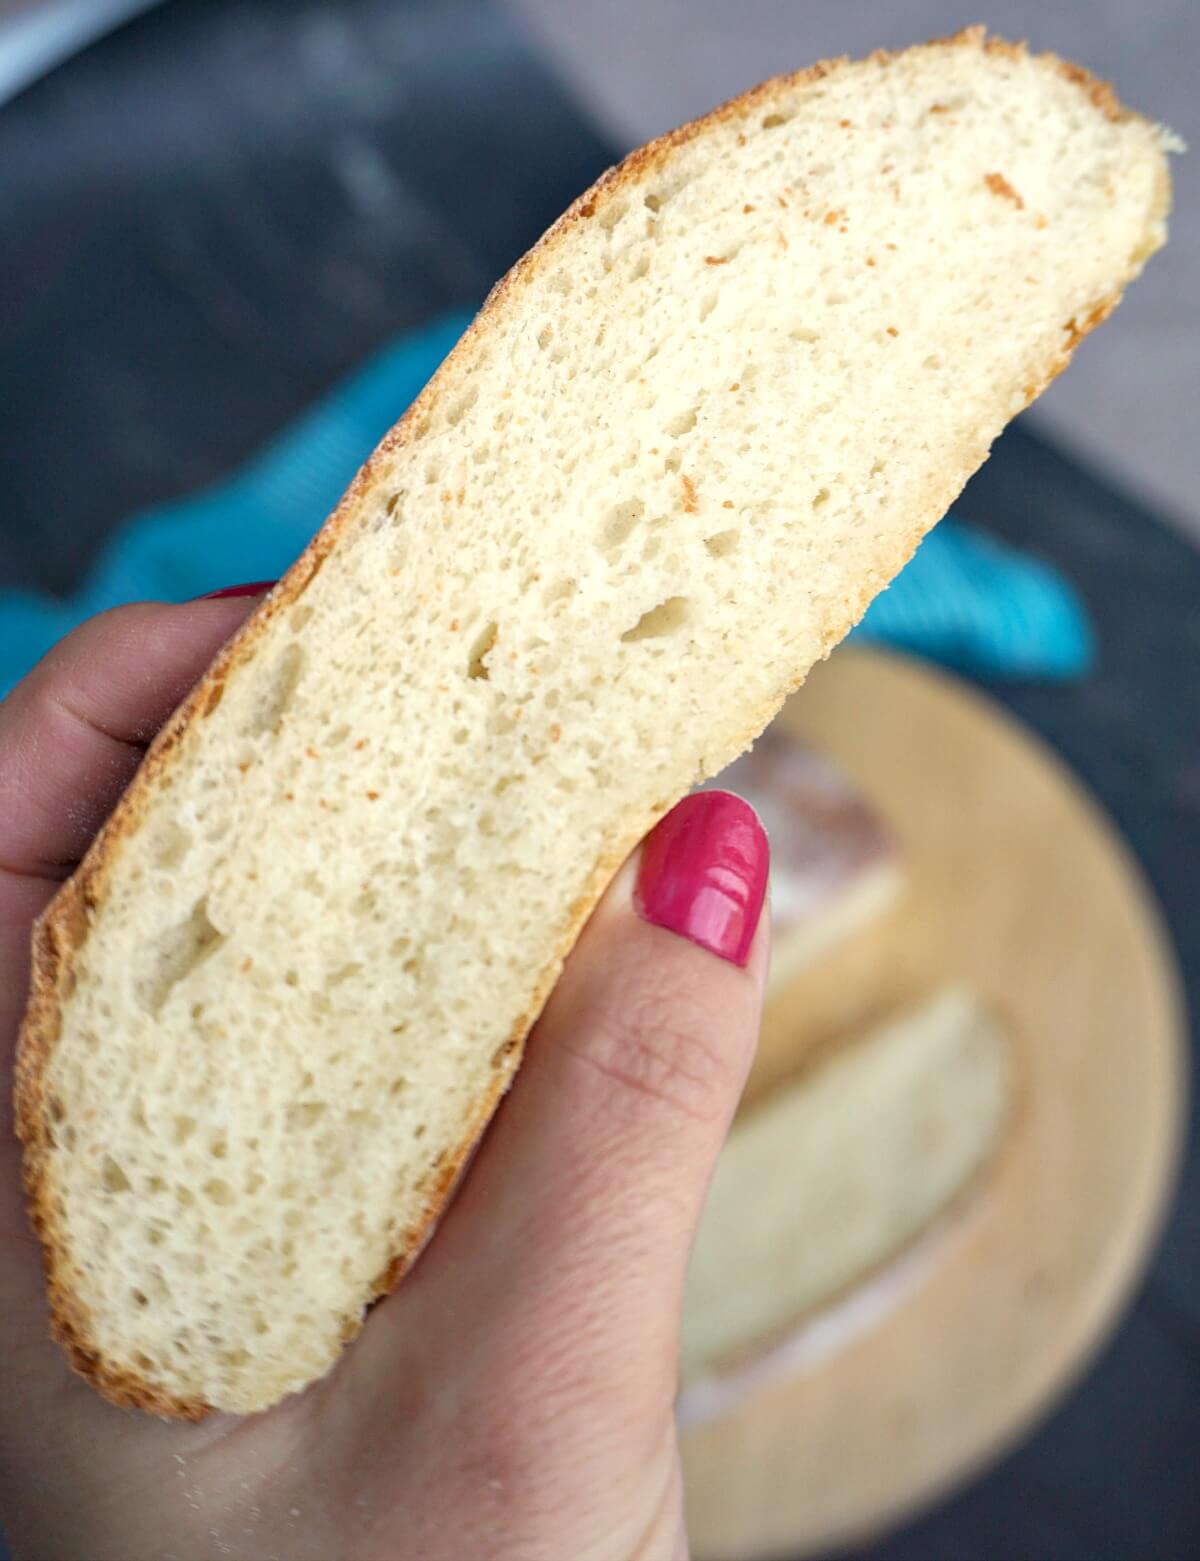 A hand holding a slice of potato bread.